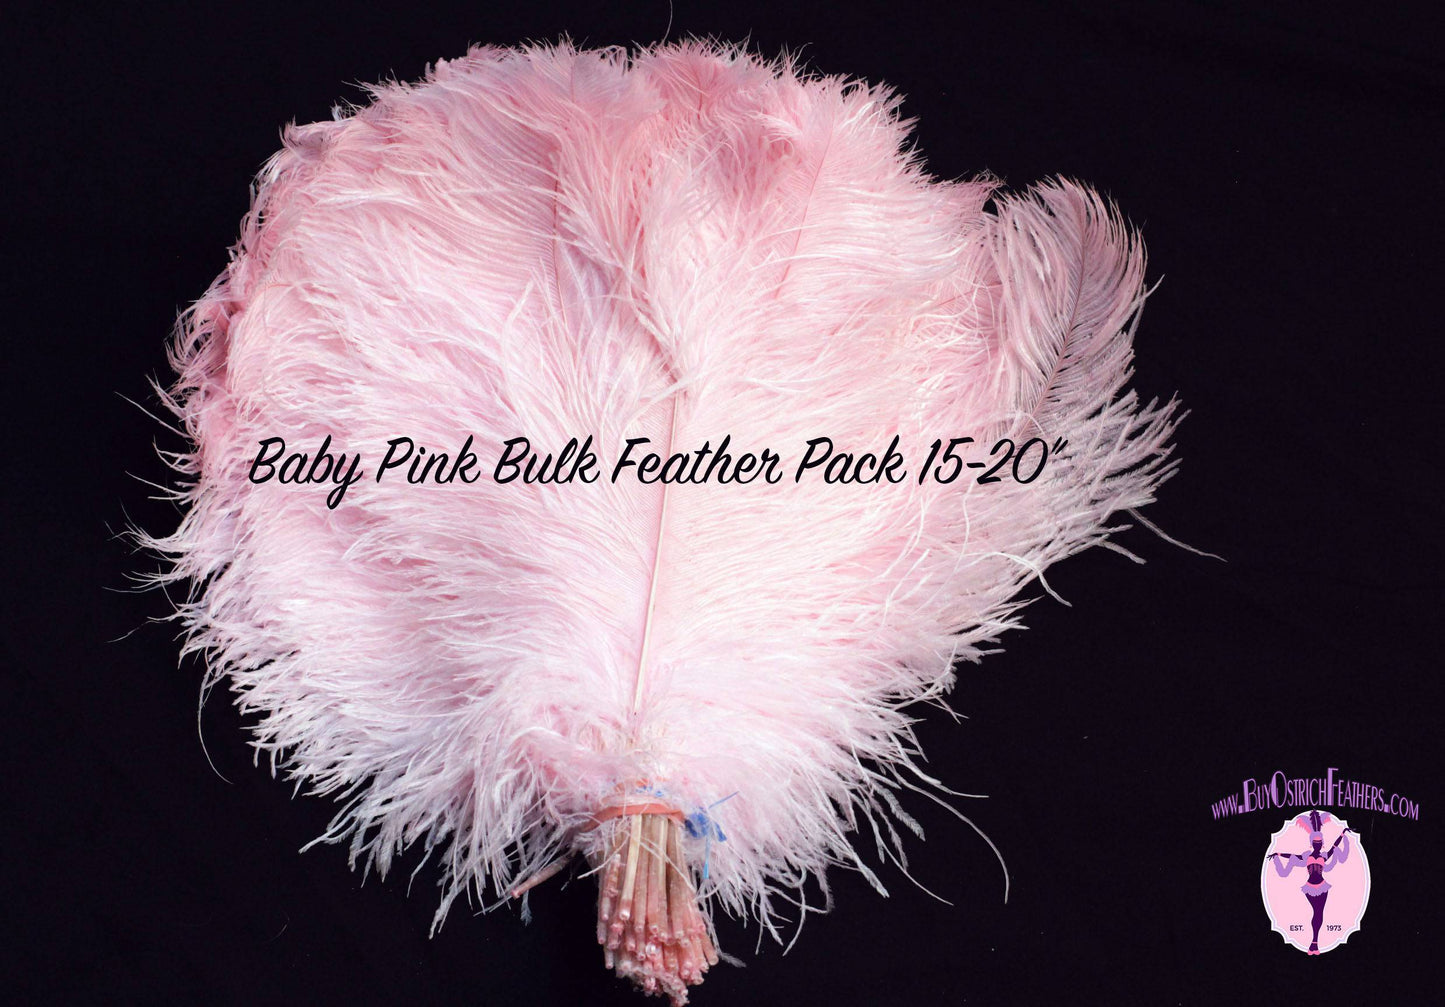 100 Pieces - 6-8 Light Pink Wholesale Ostrich Drabs Feathers (Bulk)